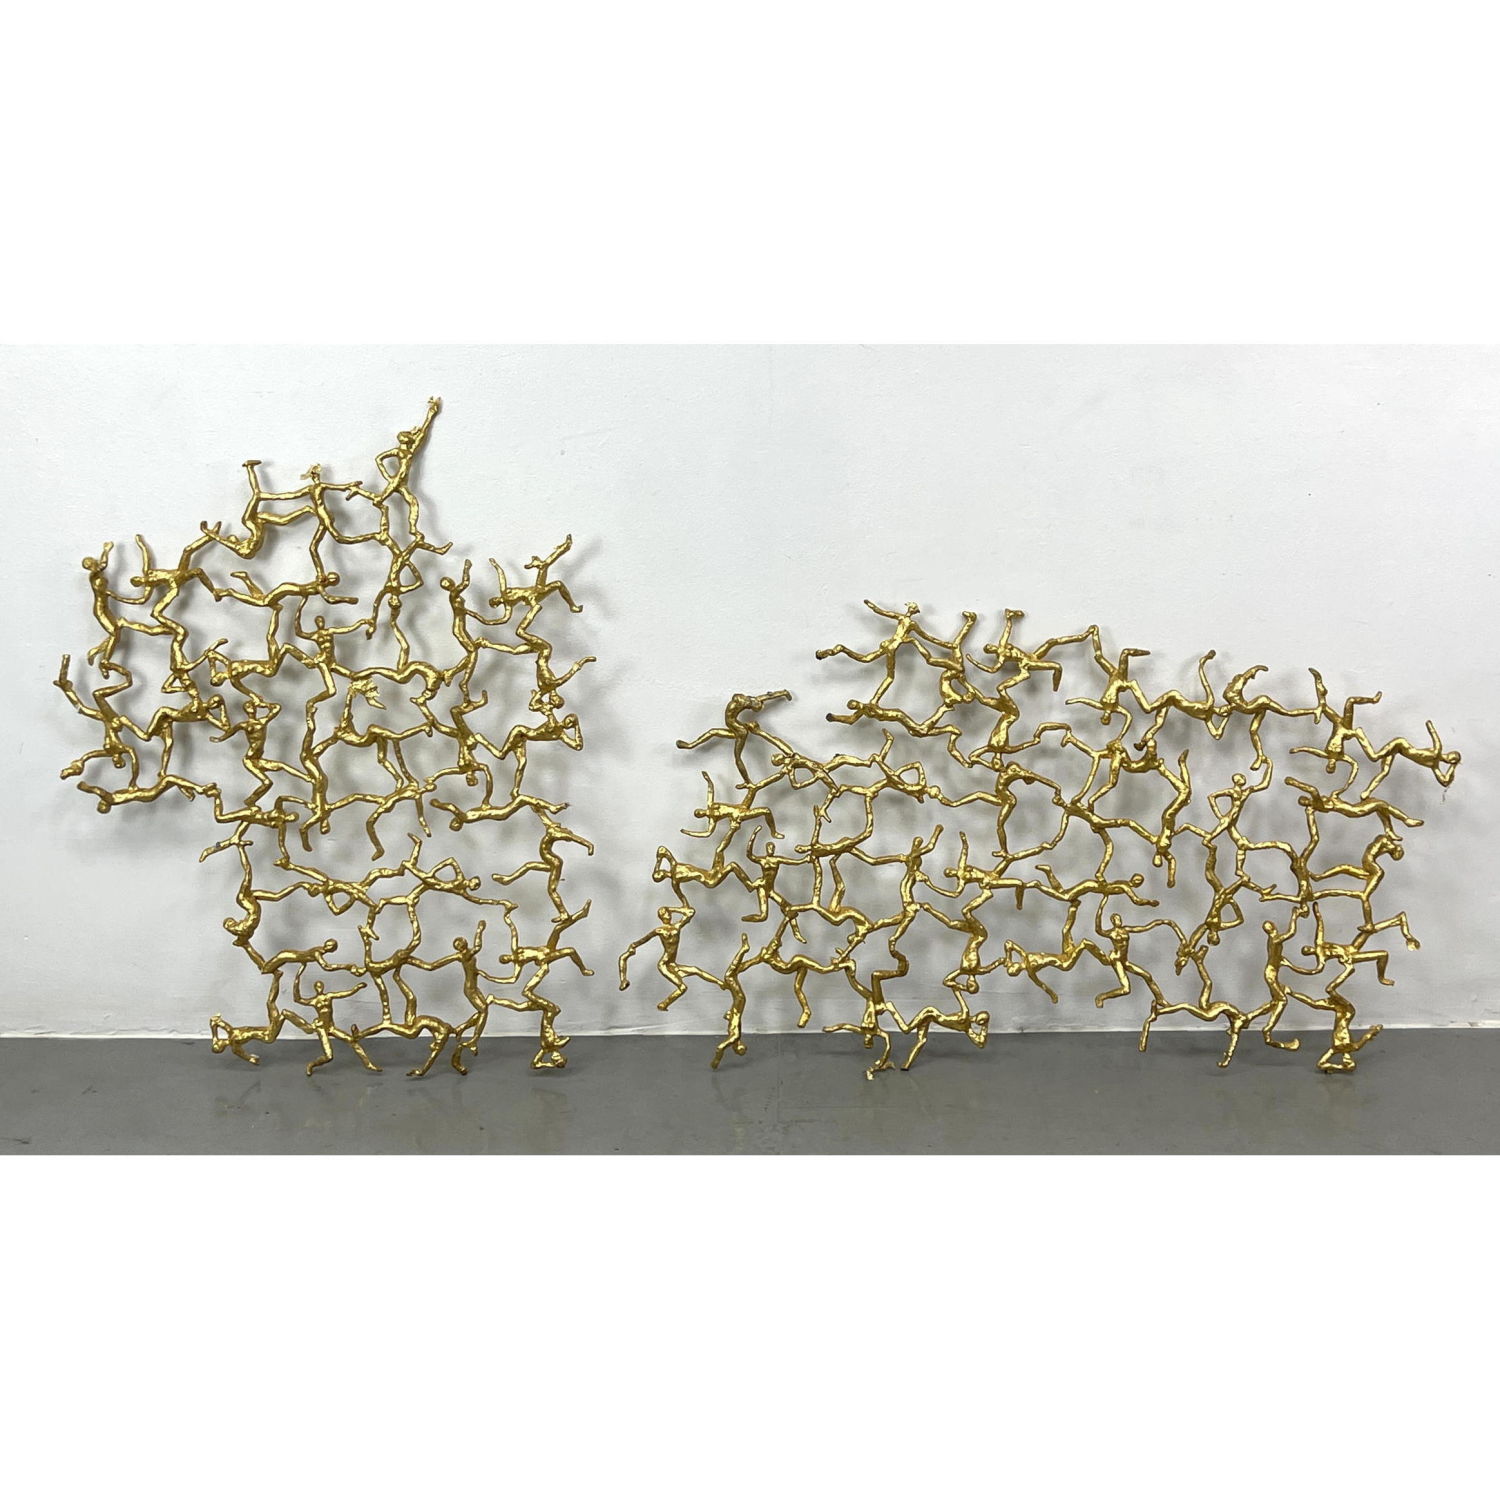 2pc Figural Gilt Metal Wall Sculptures  2b9037